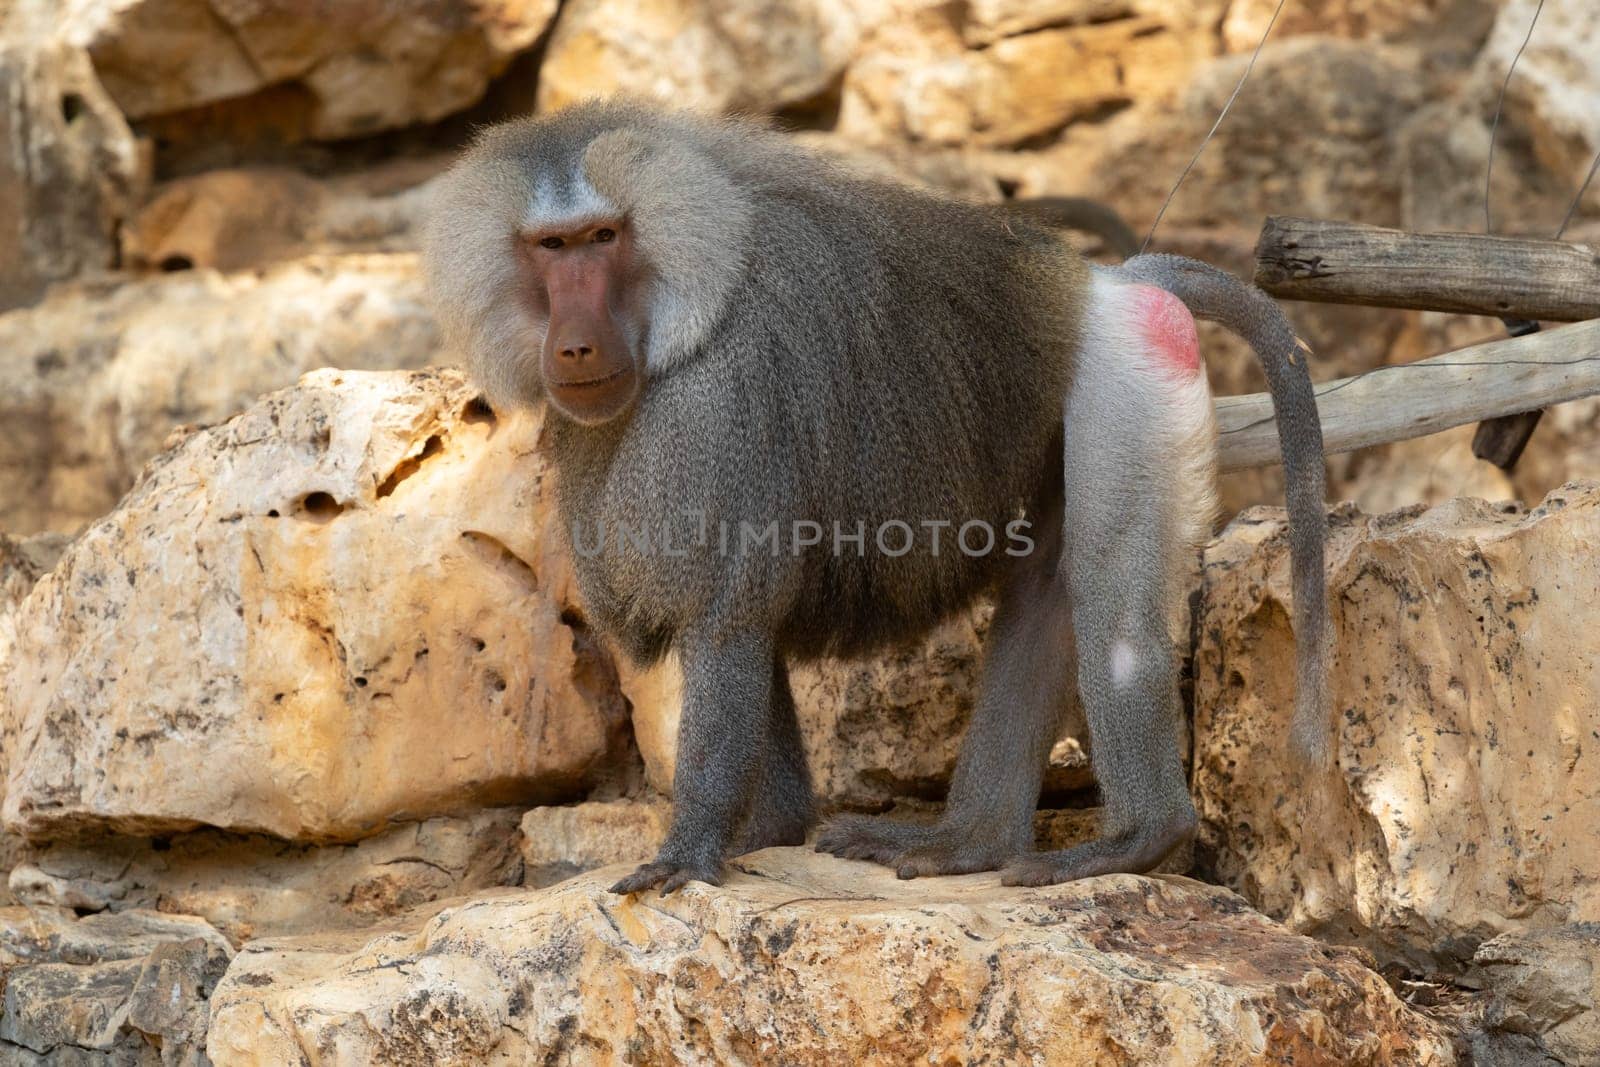 Monkey Baboon in natural habitat by gordiza